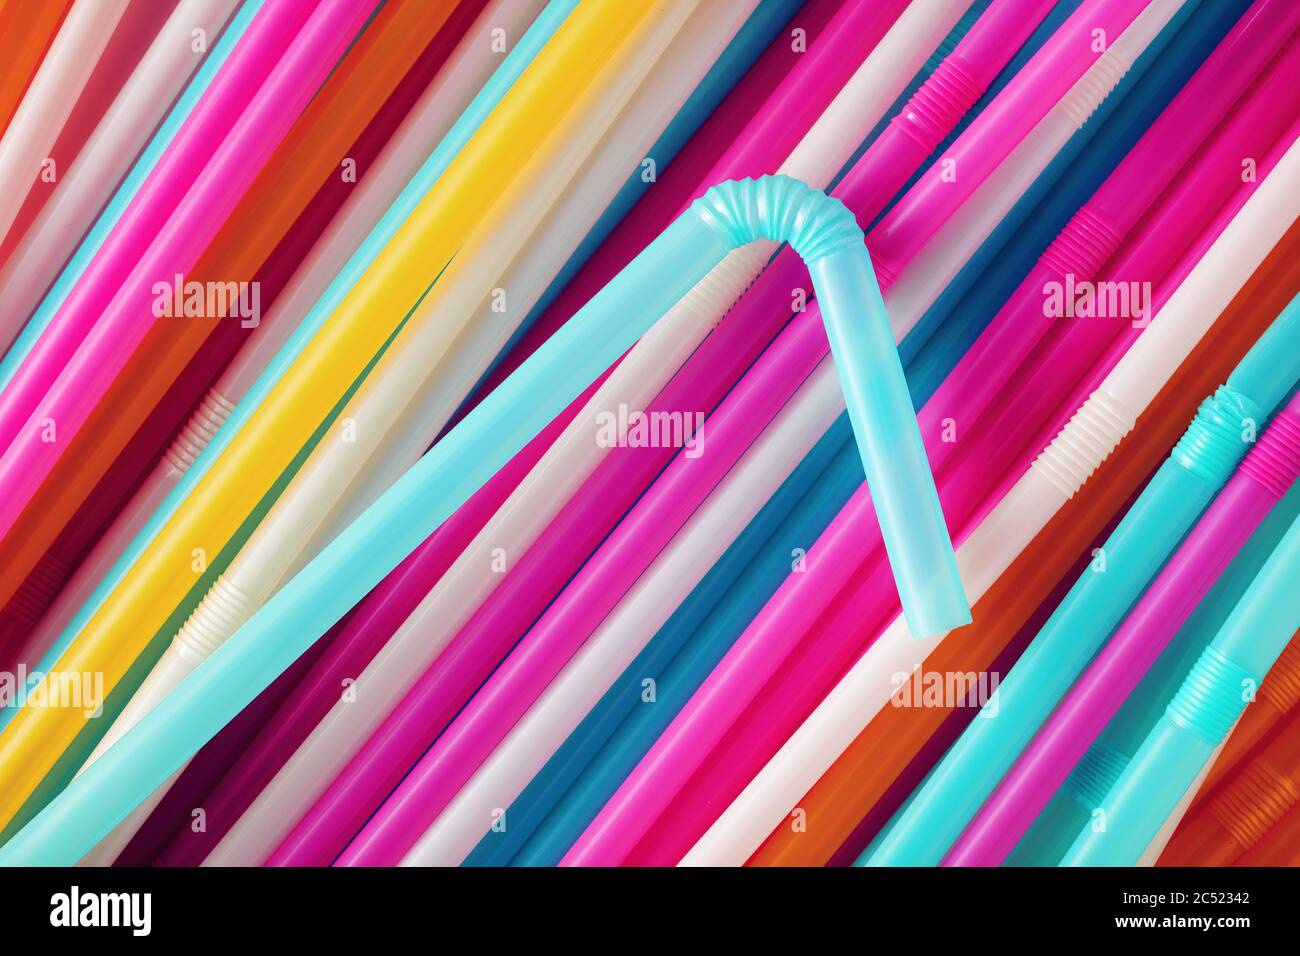 Plastic Straws, 200 Packs Of Straws Drinking Plastic Straws Reusable Curly Straws  Reusable Straw Multicolor Striped Bendable Straws Flexible Straws